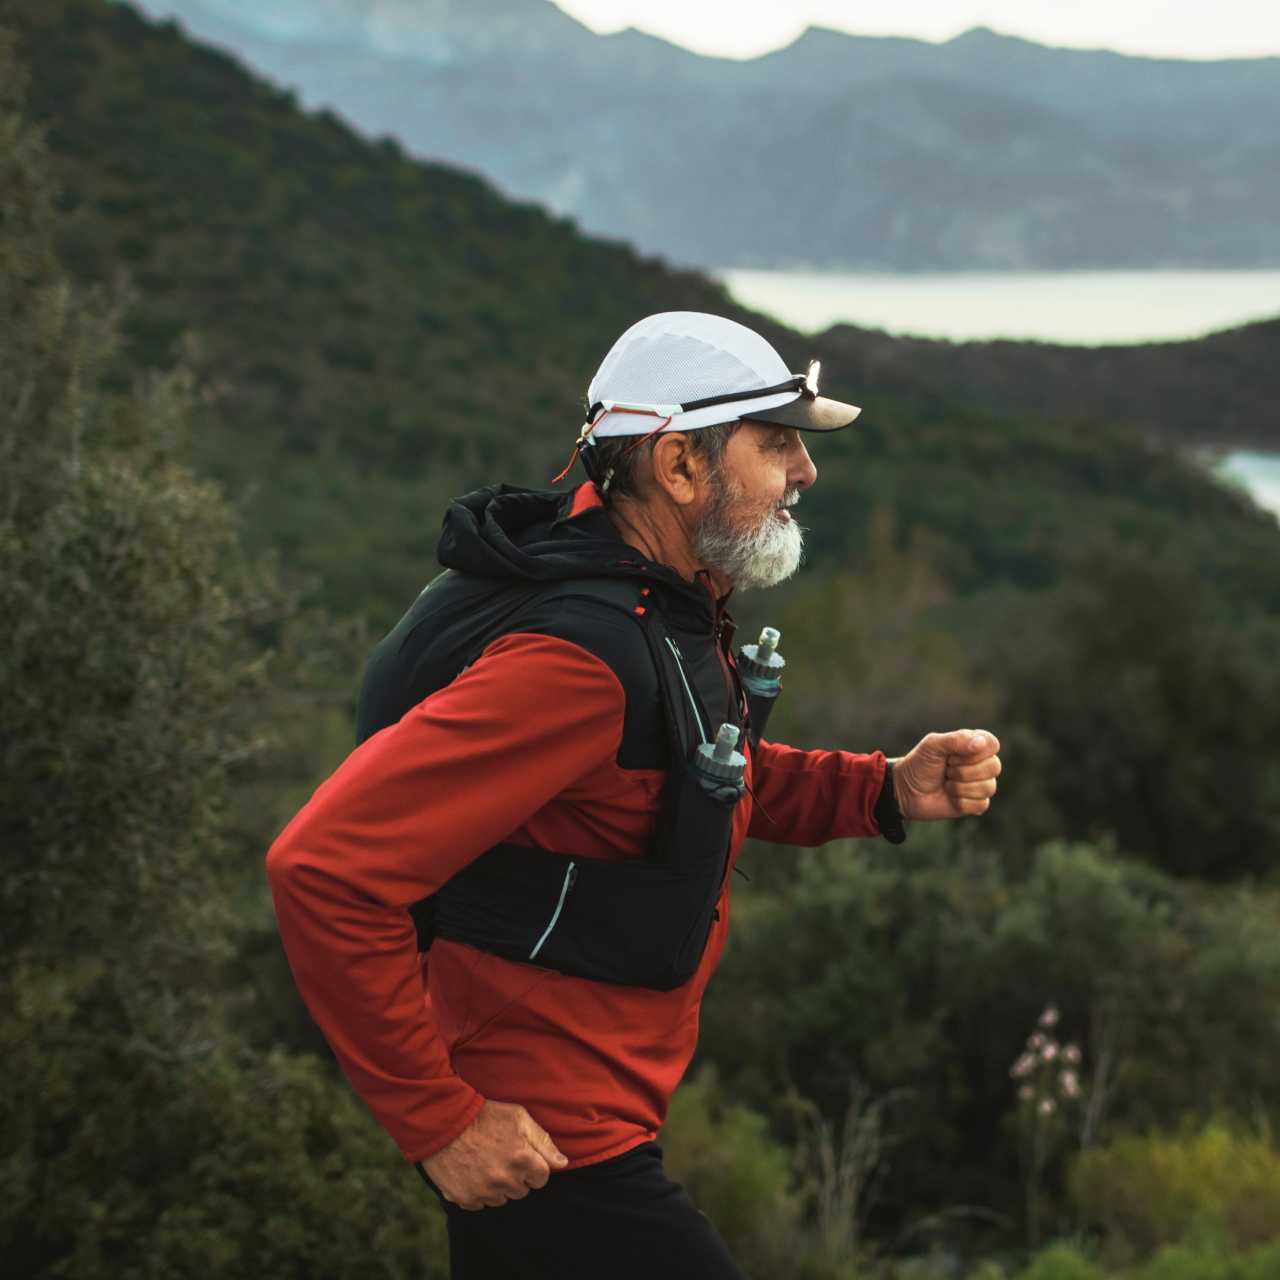 Older man in red shirt, black running vest, and white hat running through mountainous trail